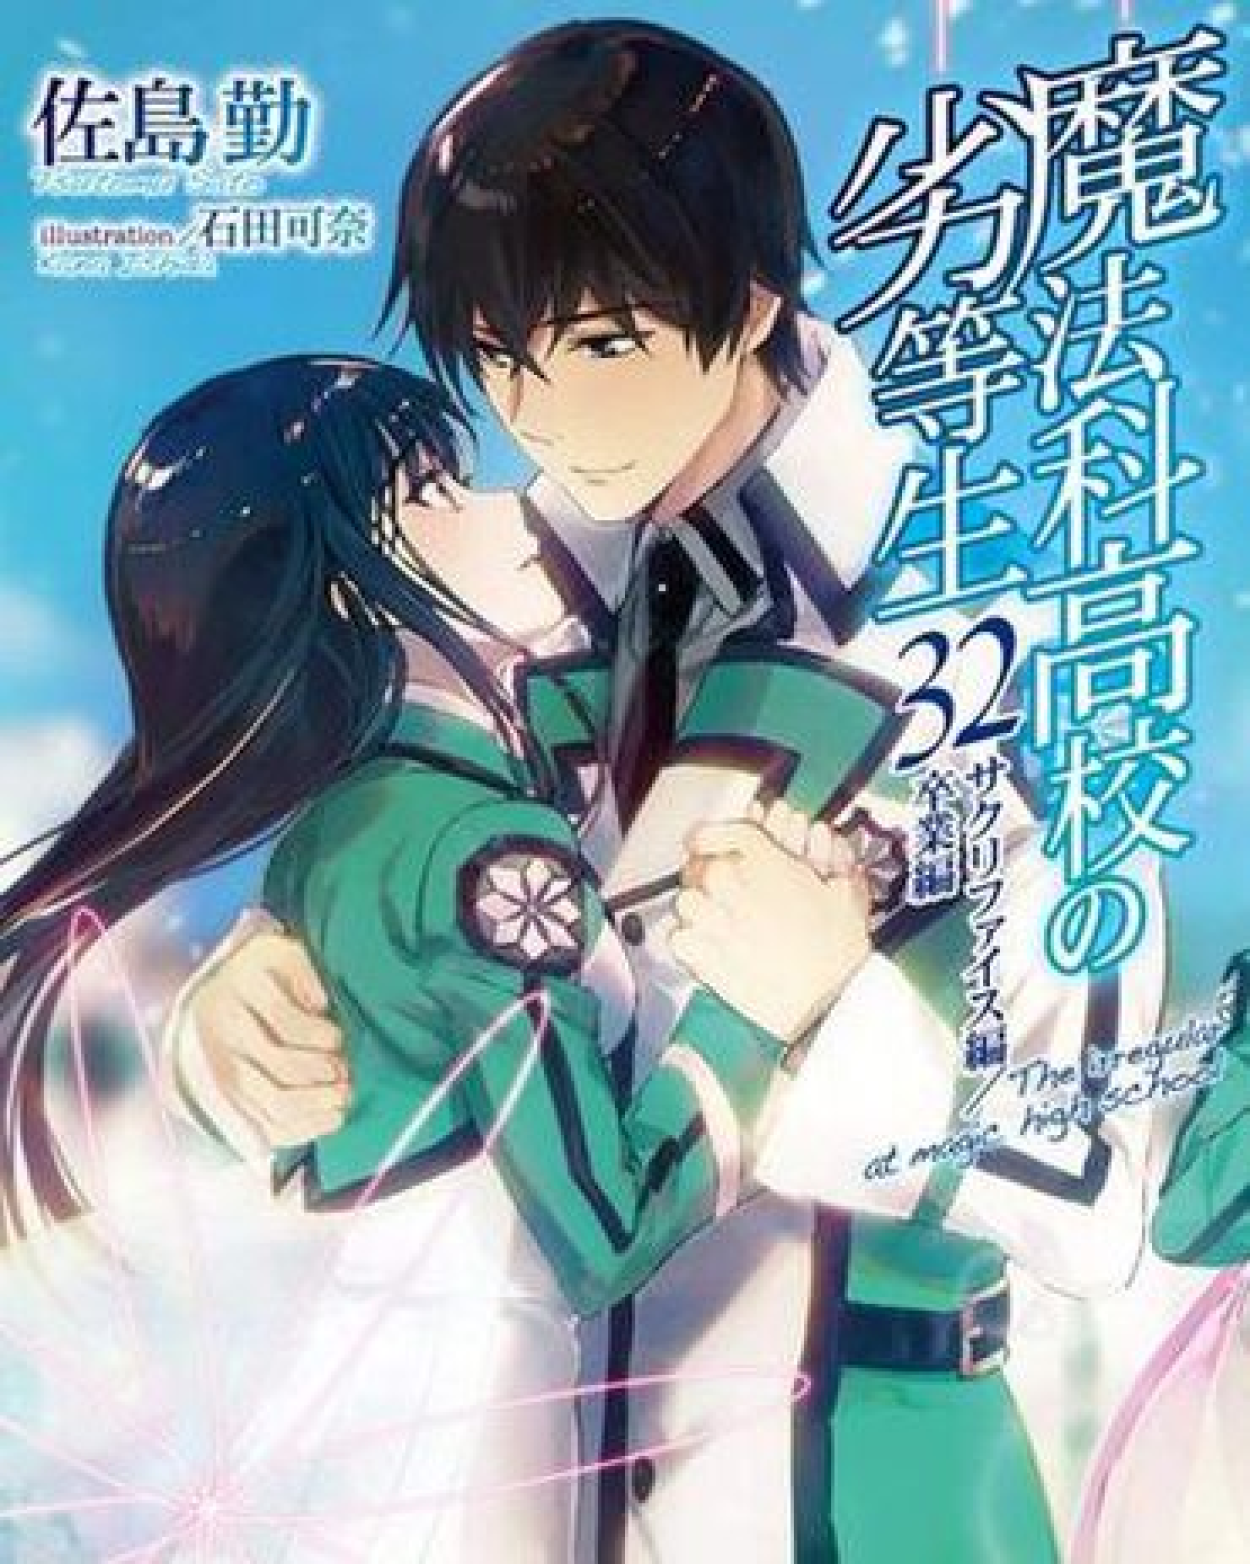 Anime minimalist poster  Anime, Animes para assistir, Animais amorosos